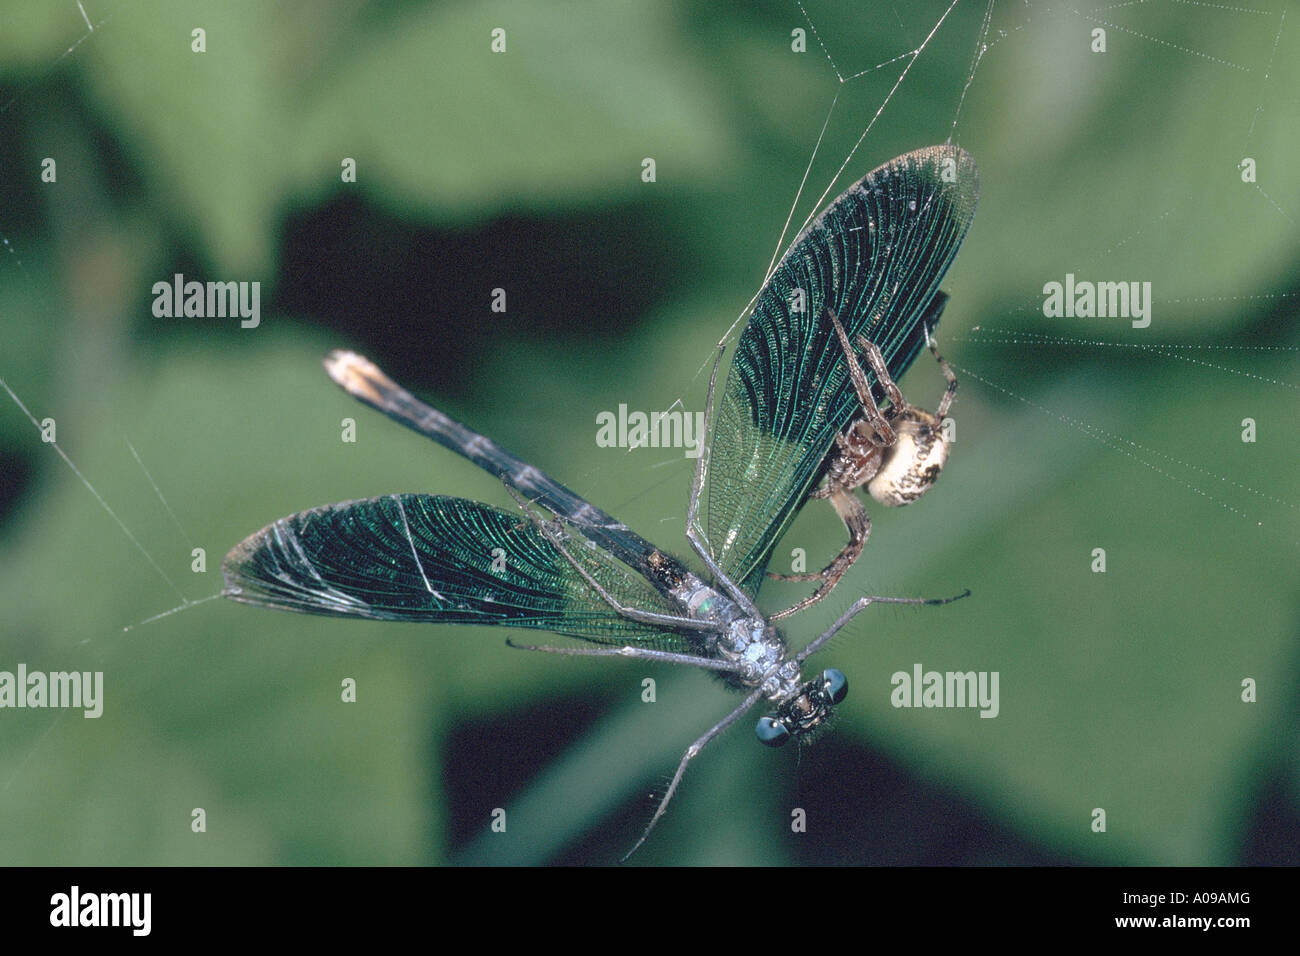 banded blackwings, banded agrion, banded demoiselle (Calopteryx splendens, Agrion splendens), male as prey of an orbweaver, Ger Stock Photo